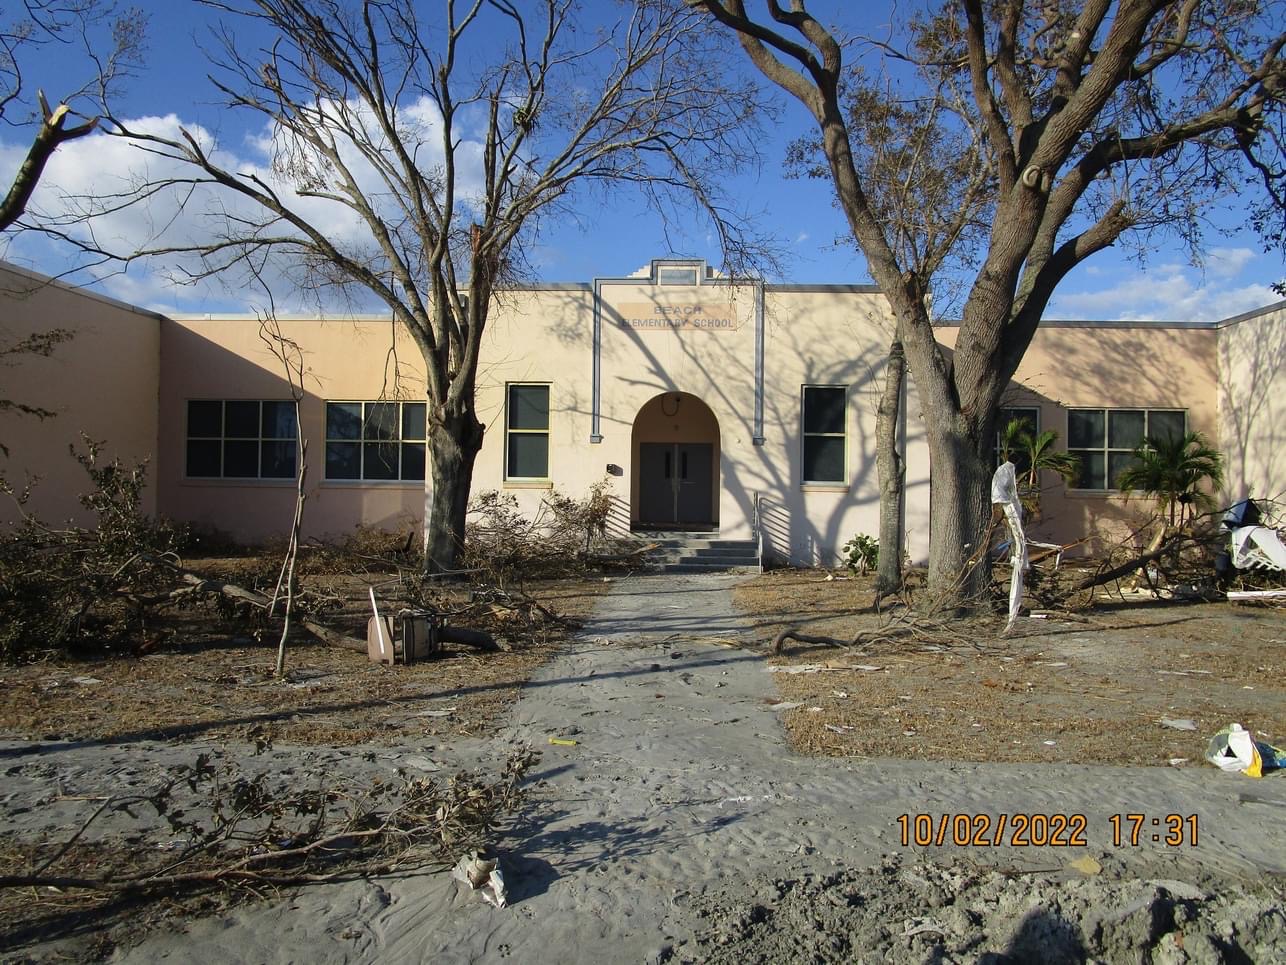 Fort Myers Beach Elementary